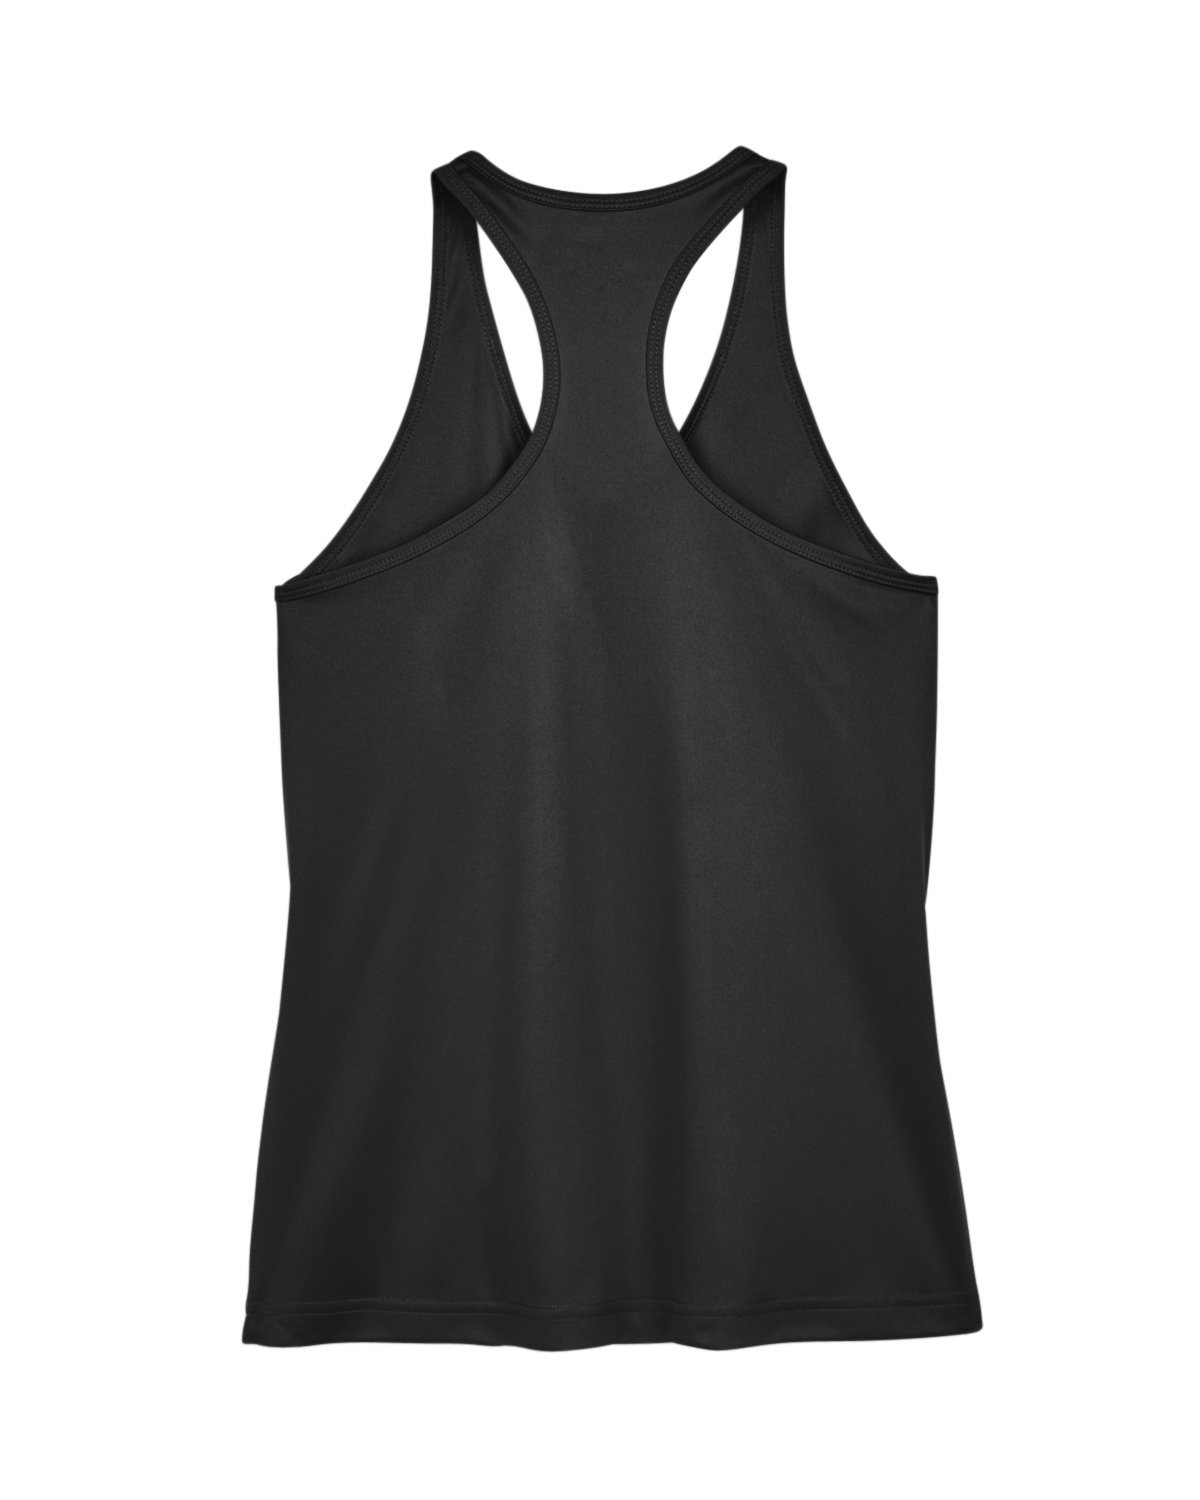 Zero Fox Given Tank Top Black Sleeveless T-shirts Cute Racerback Tanks -  365 IN LOVE - Matching Gifts Ideas